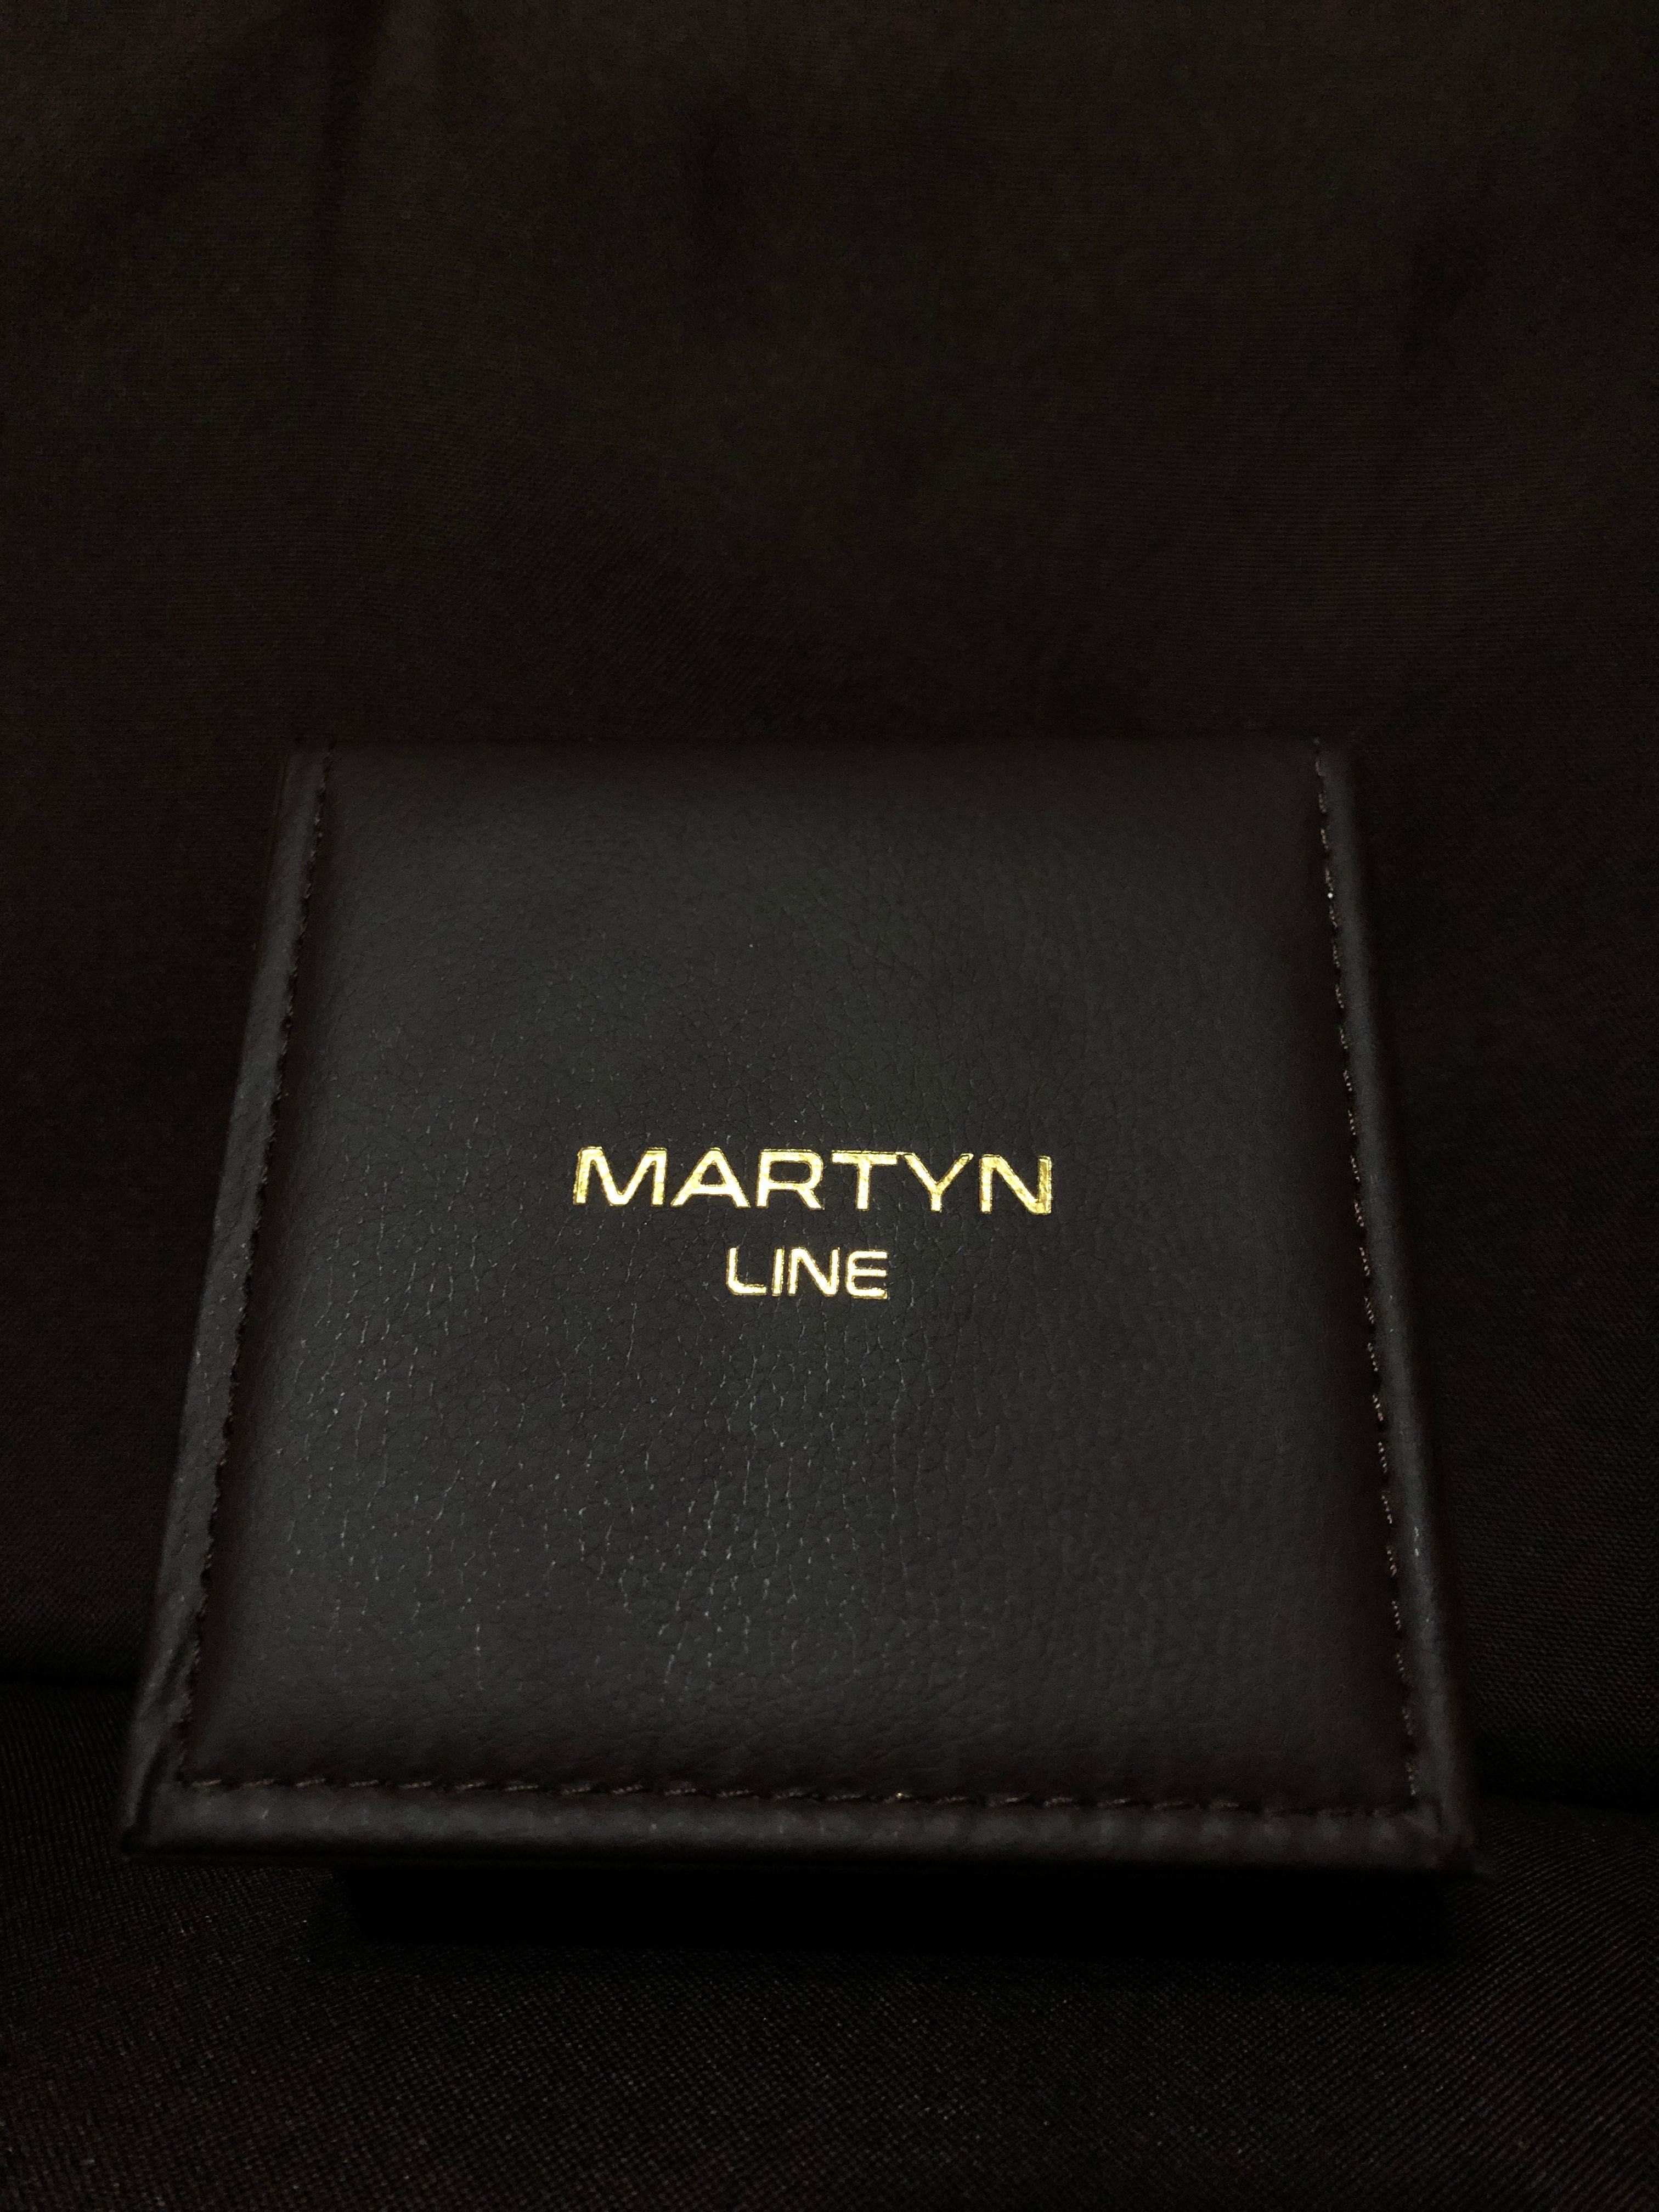 Ceas nou Original MARTYN Line -Automatic